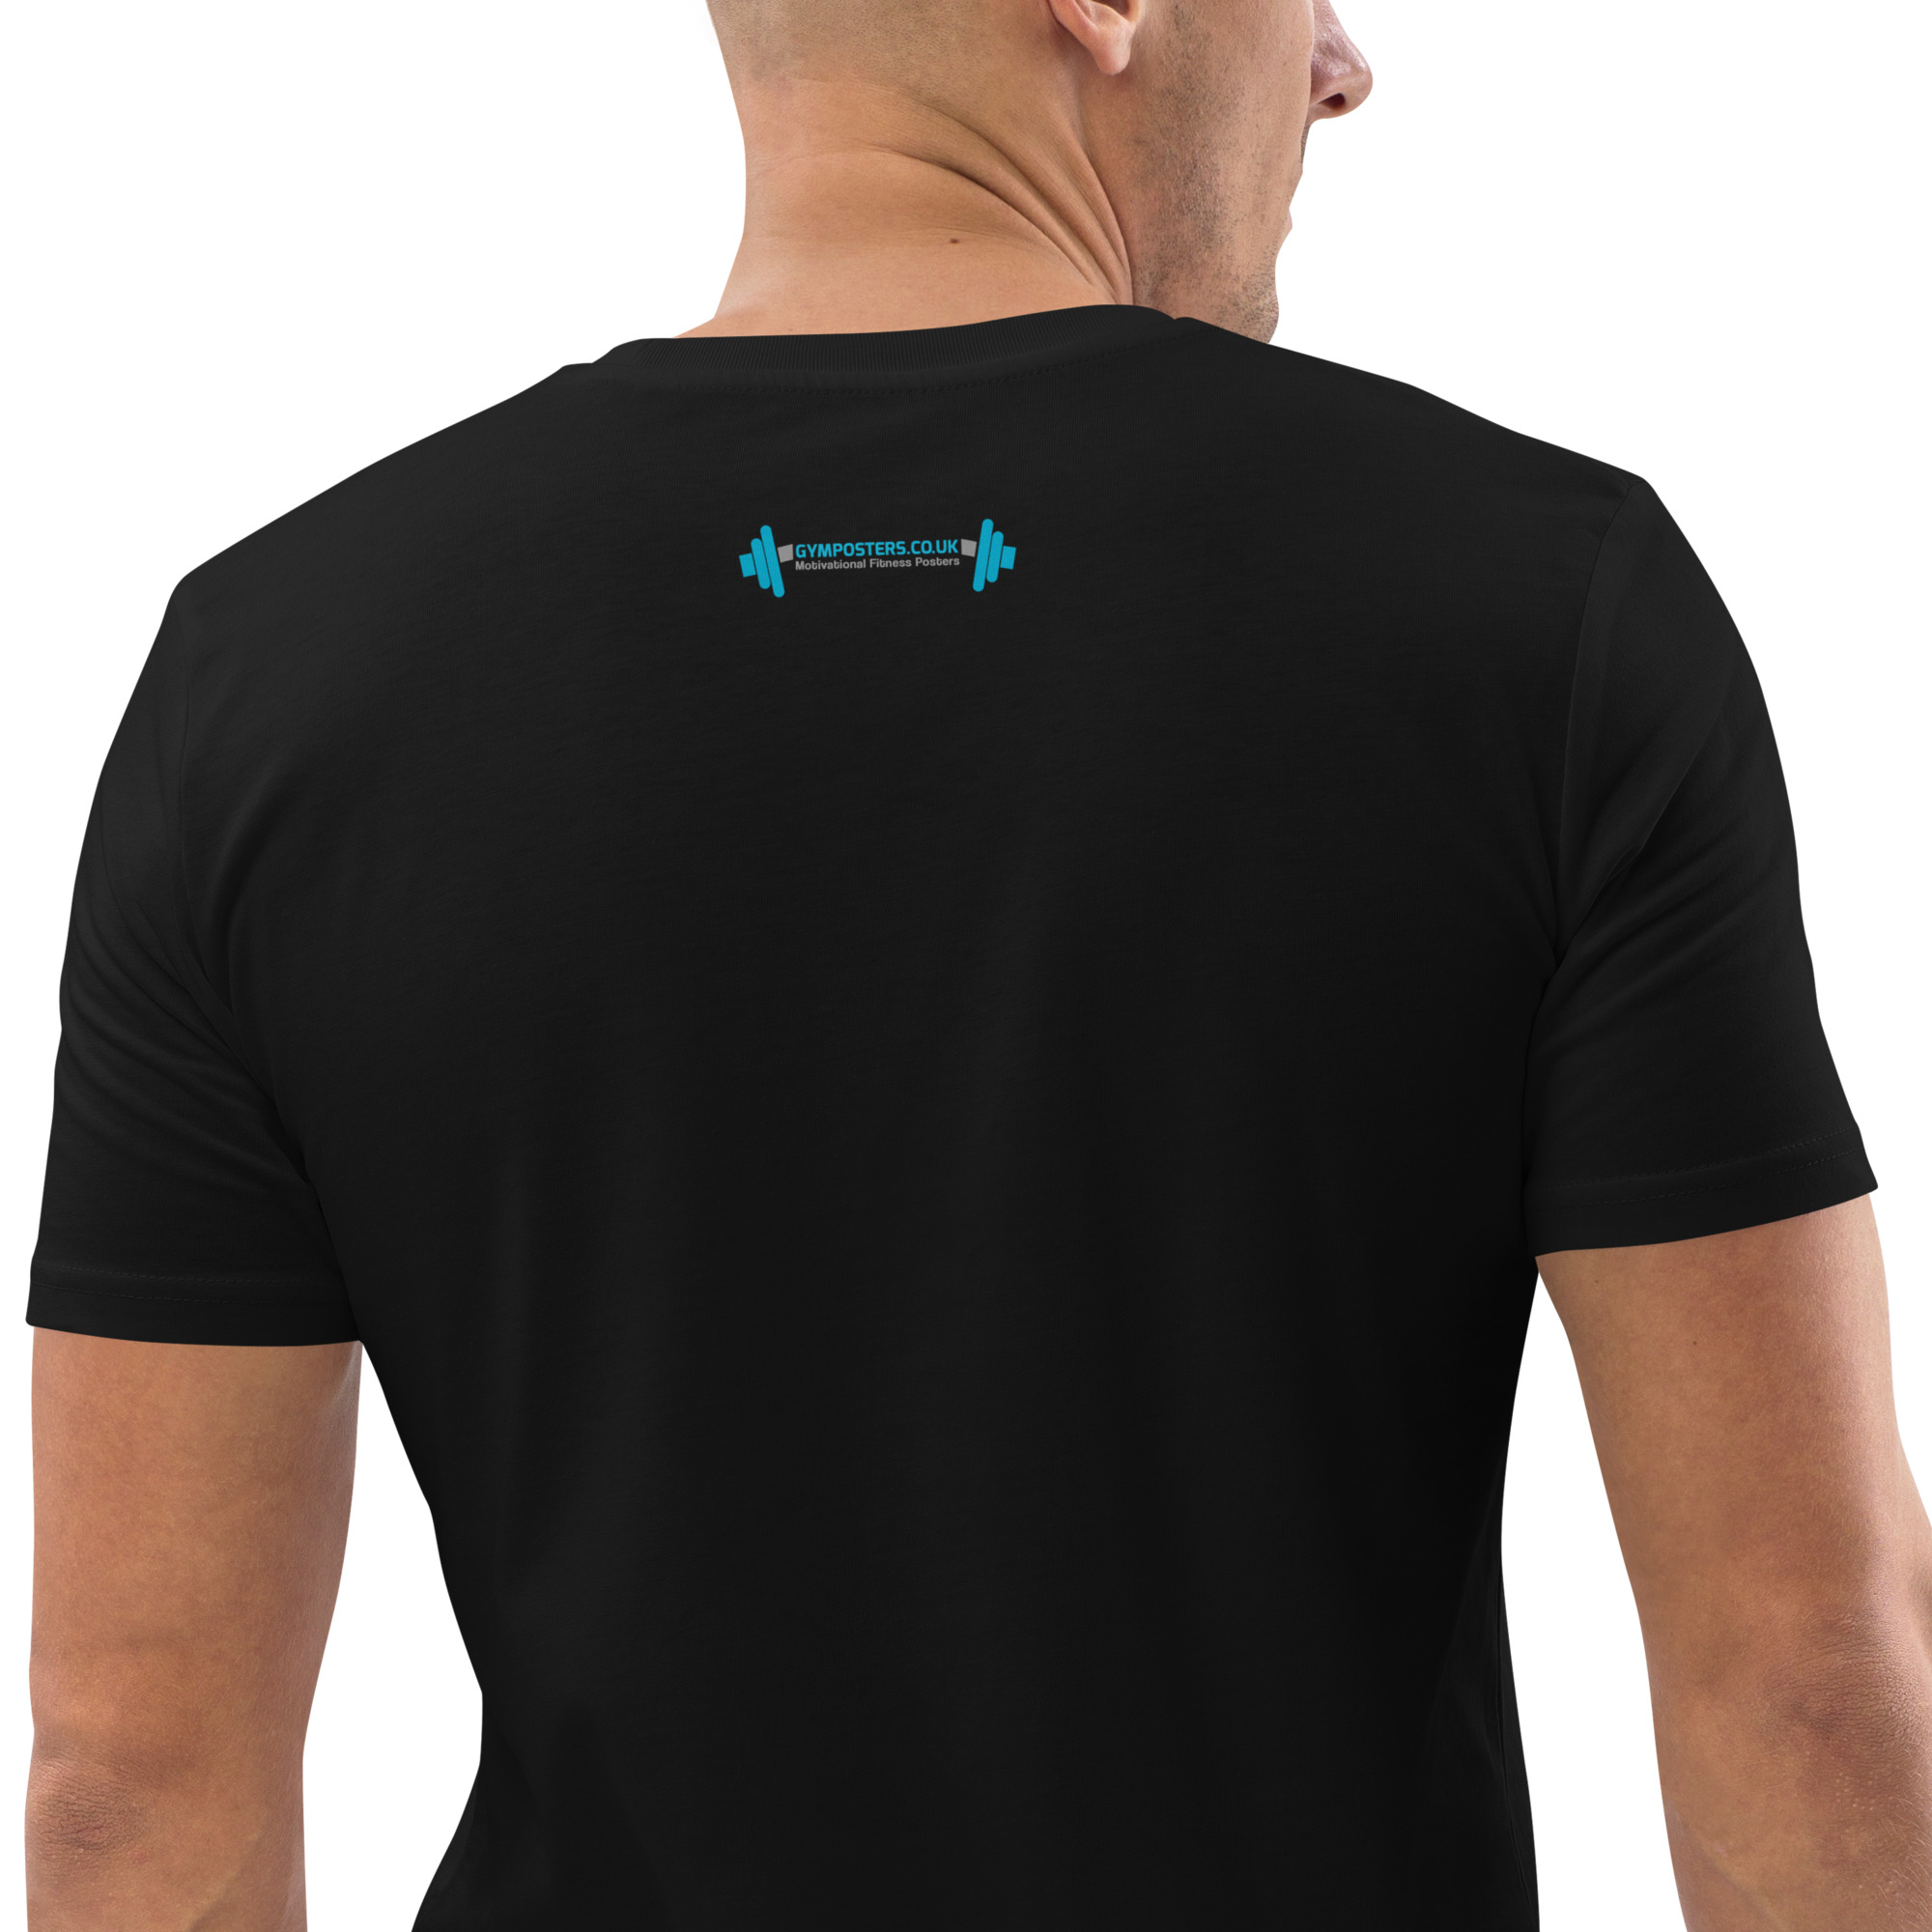 unisex-organic-cotton-t-shirt-black-zoomed-in-657855b07b505.jpg